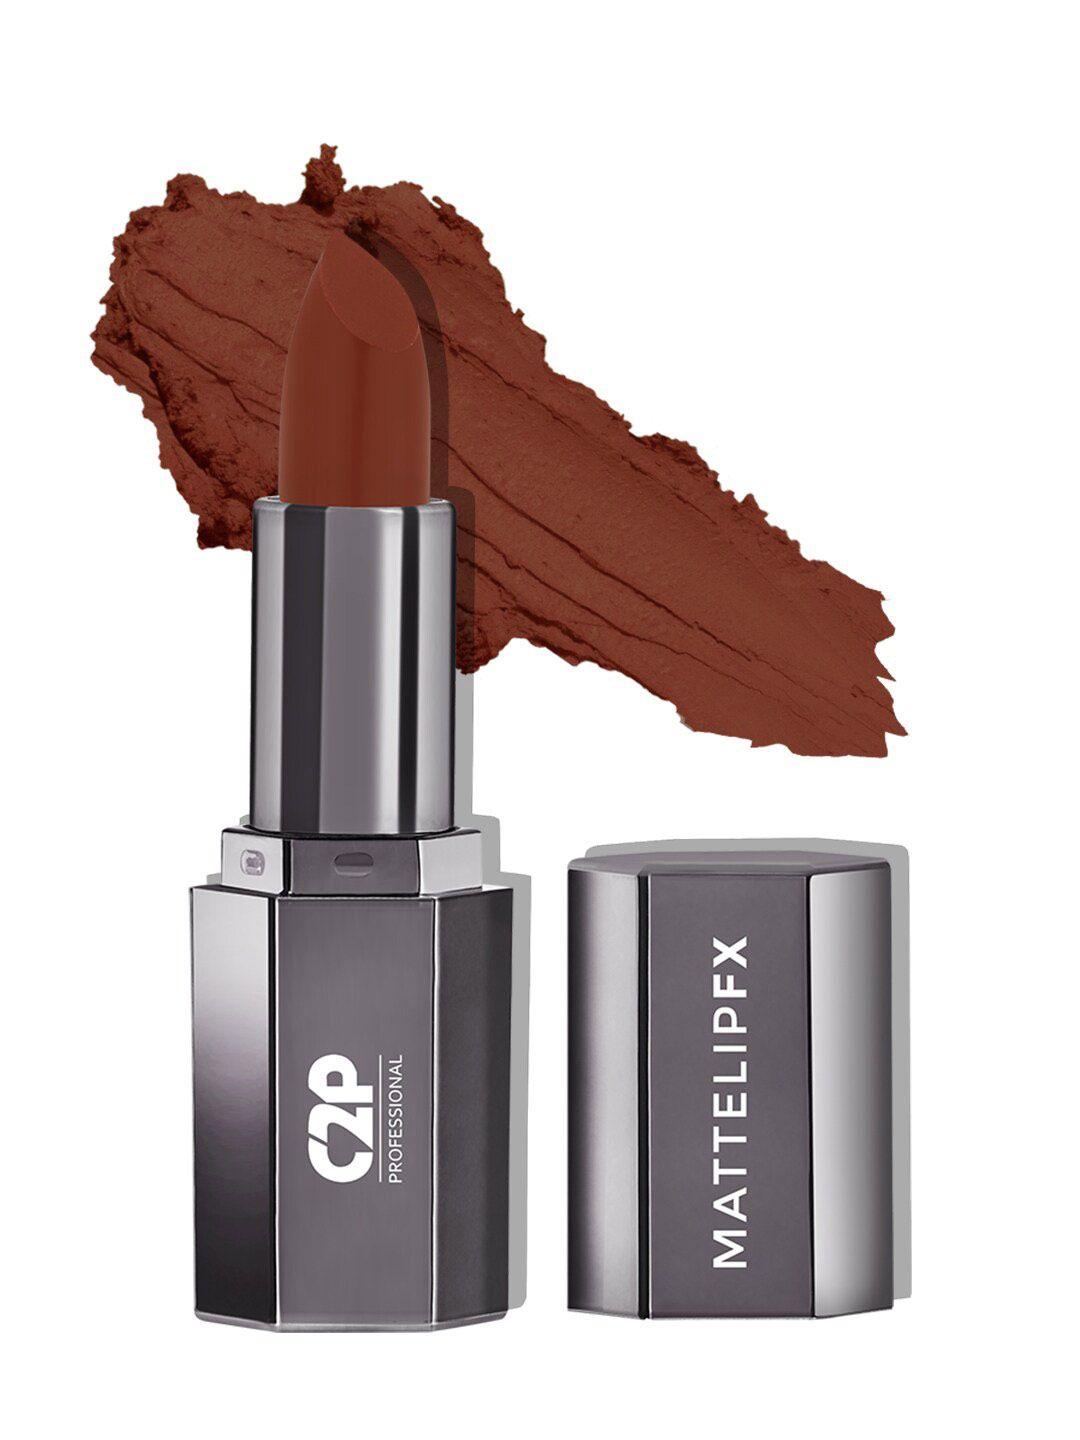 c2p professional makeup mattelipfx long-lasting lipstick - touch of spice 36